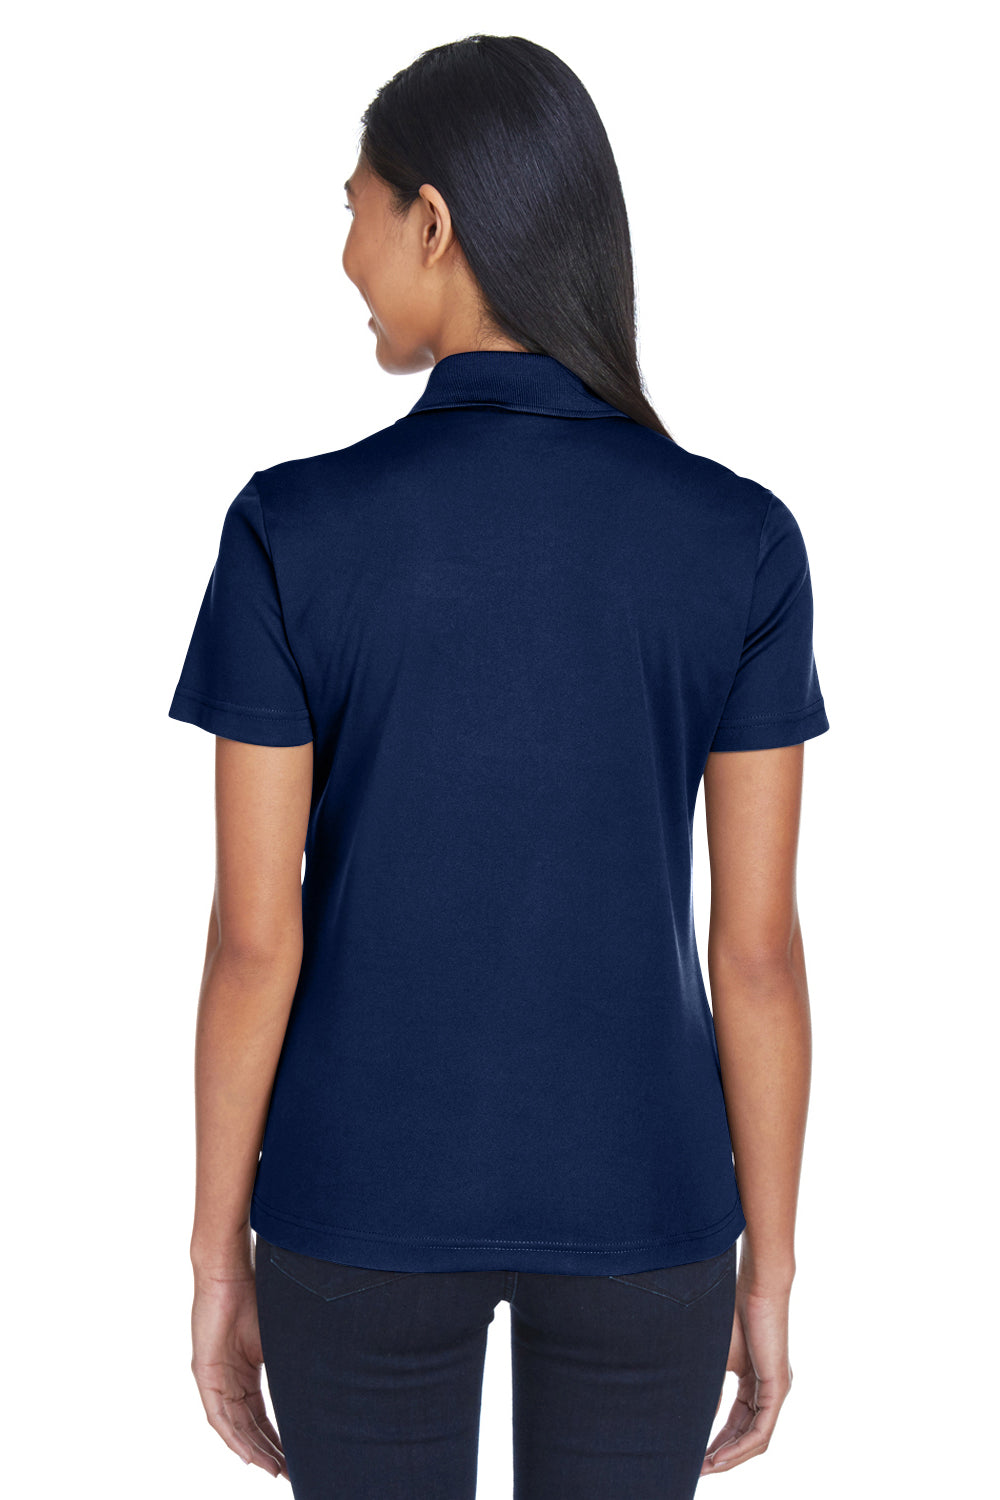 Core 365 CE101W Womens Balance Performance Moisture Wicking Short Sleeve Polo Shirt Electric Blue/Navy Blue Back